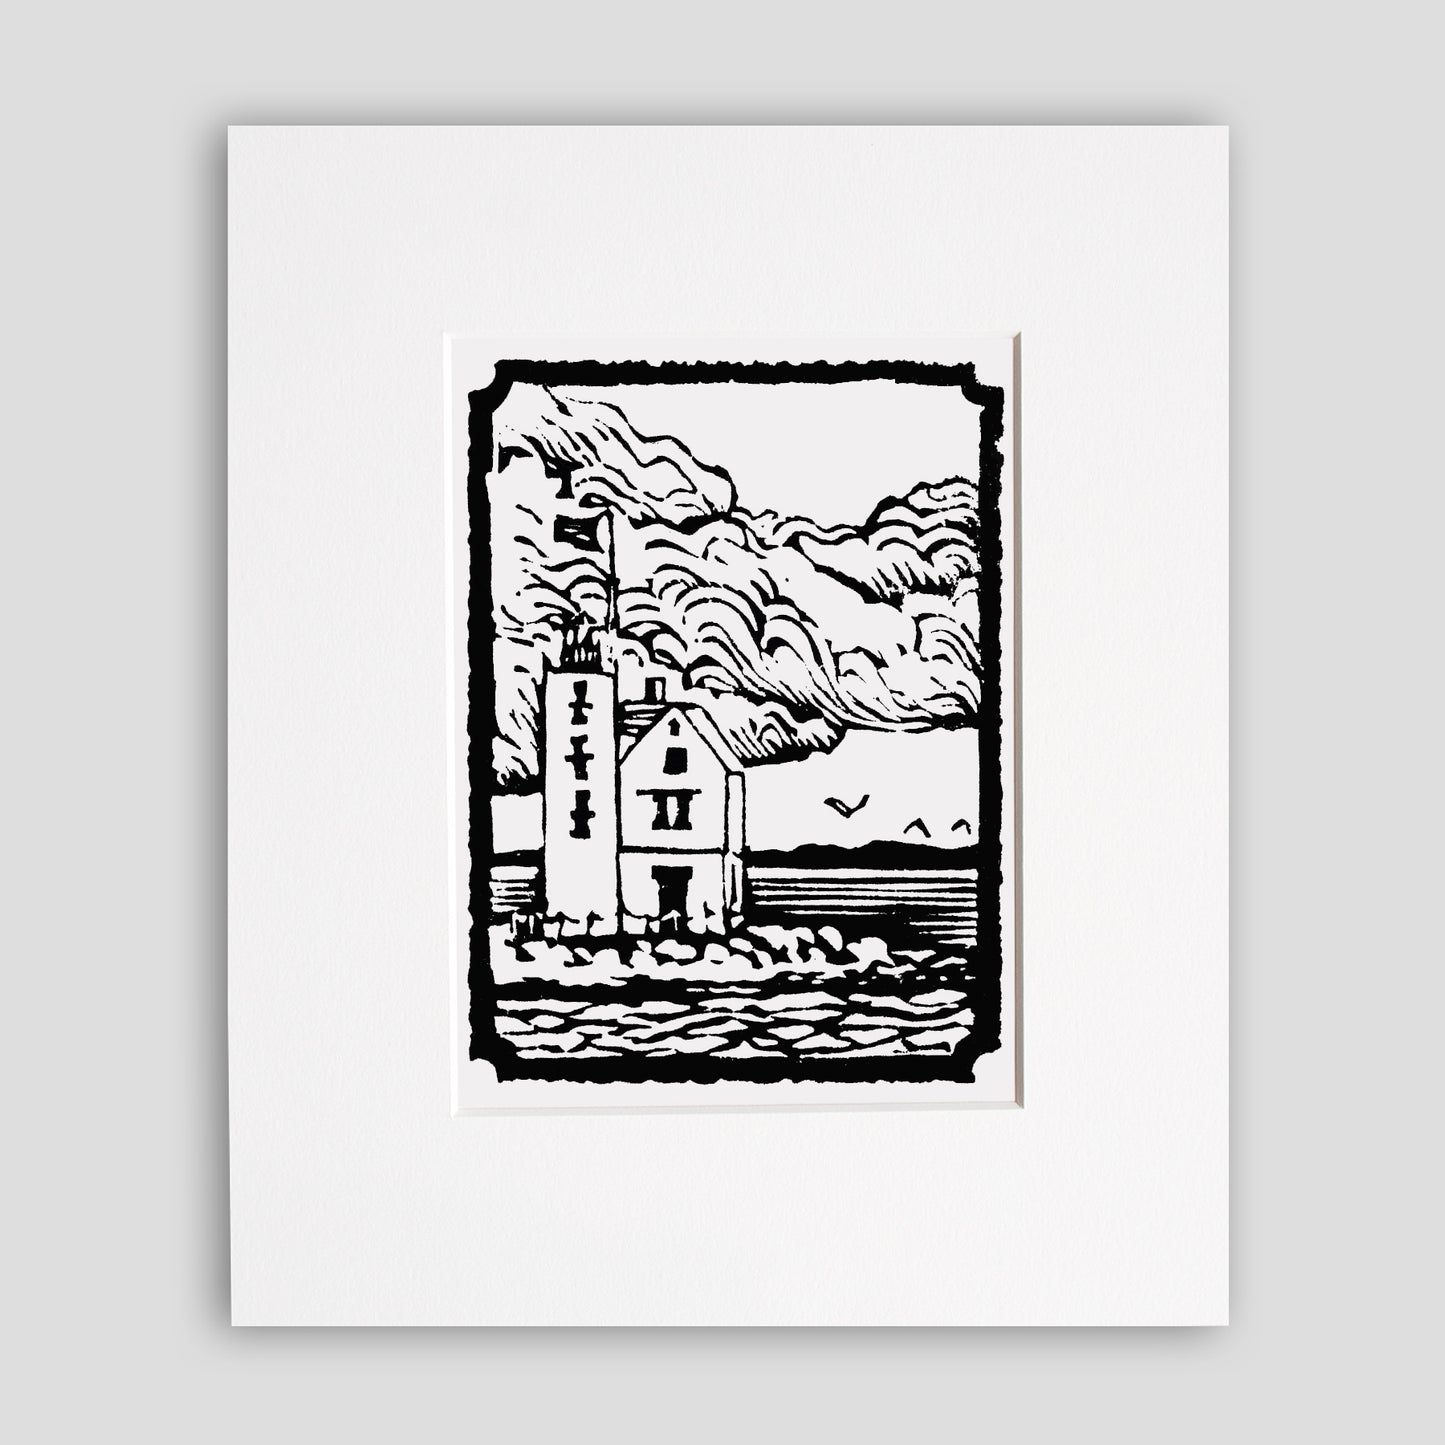 Mini Round Island Original Block Print by Natalia Wohletz of Peninsula Prints.